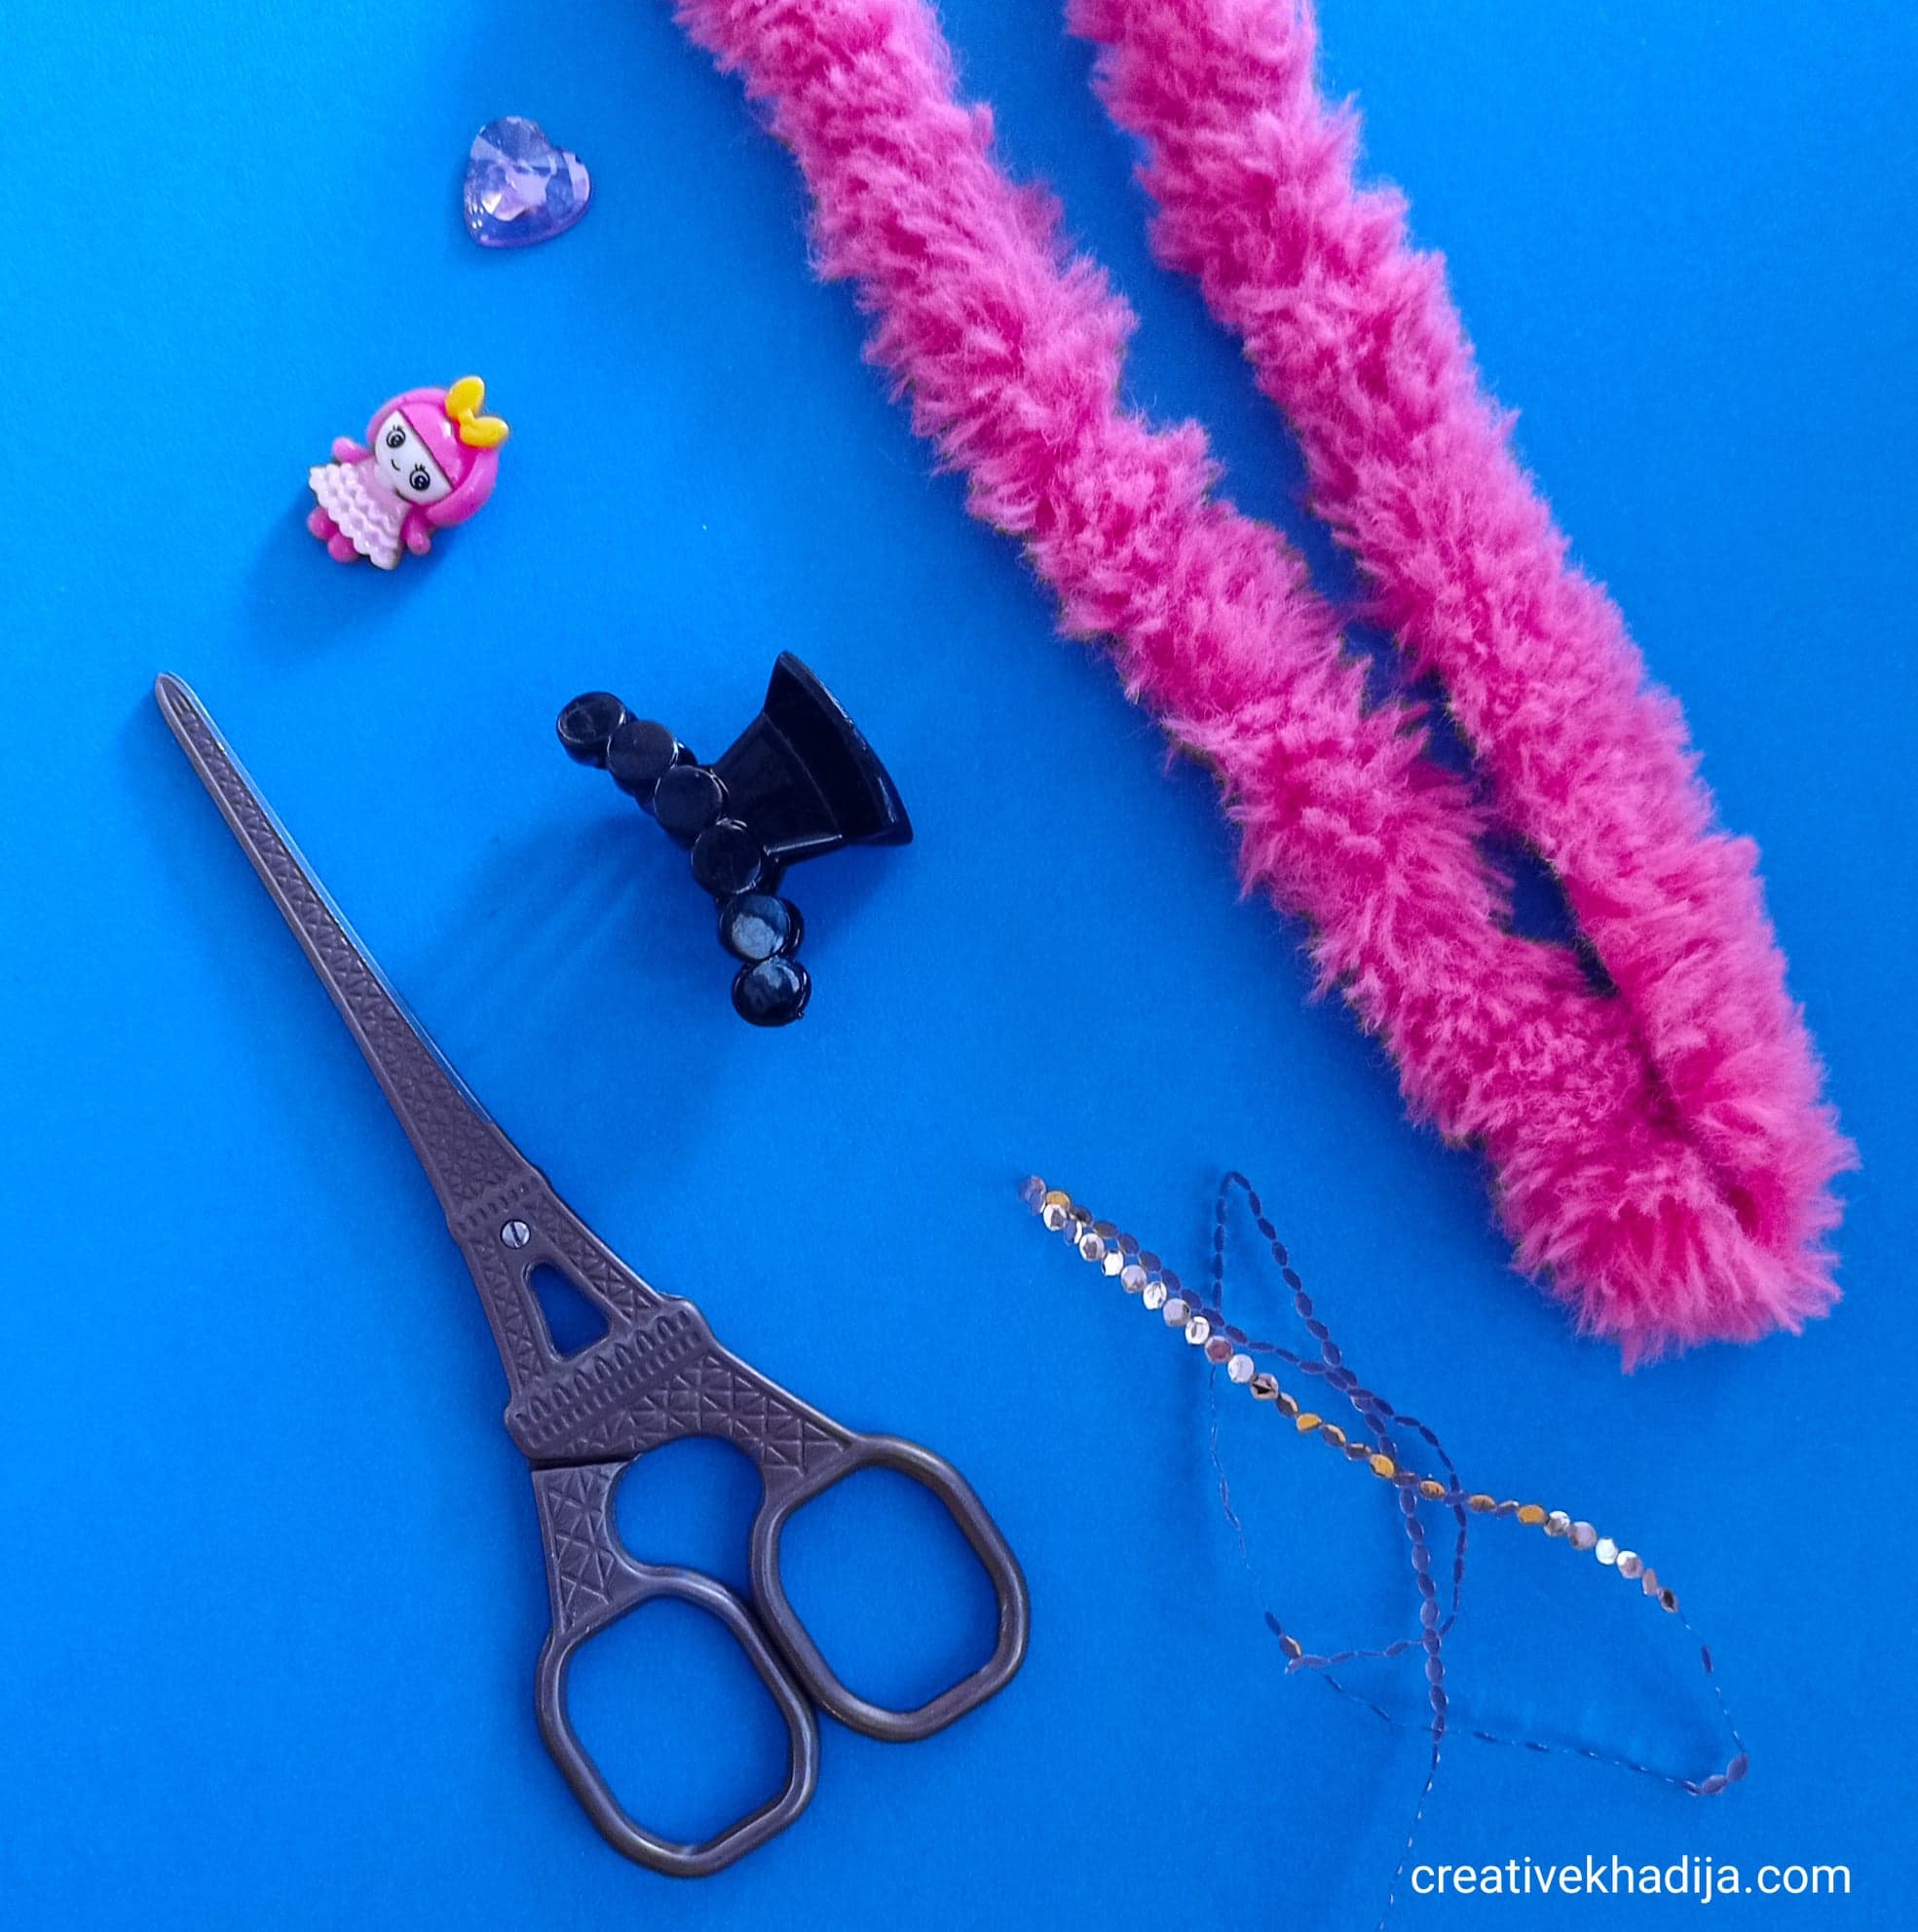 https://creativekhadija.com/wp-content/uploads/2021/02/5-minute-crafts-for-kids-hair-clip-DIYs-craft-supplies.jpg